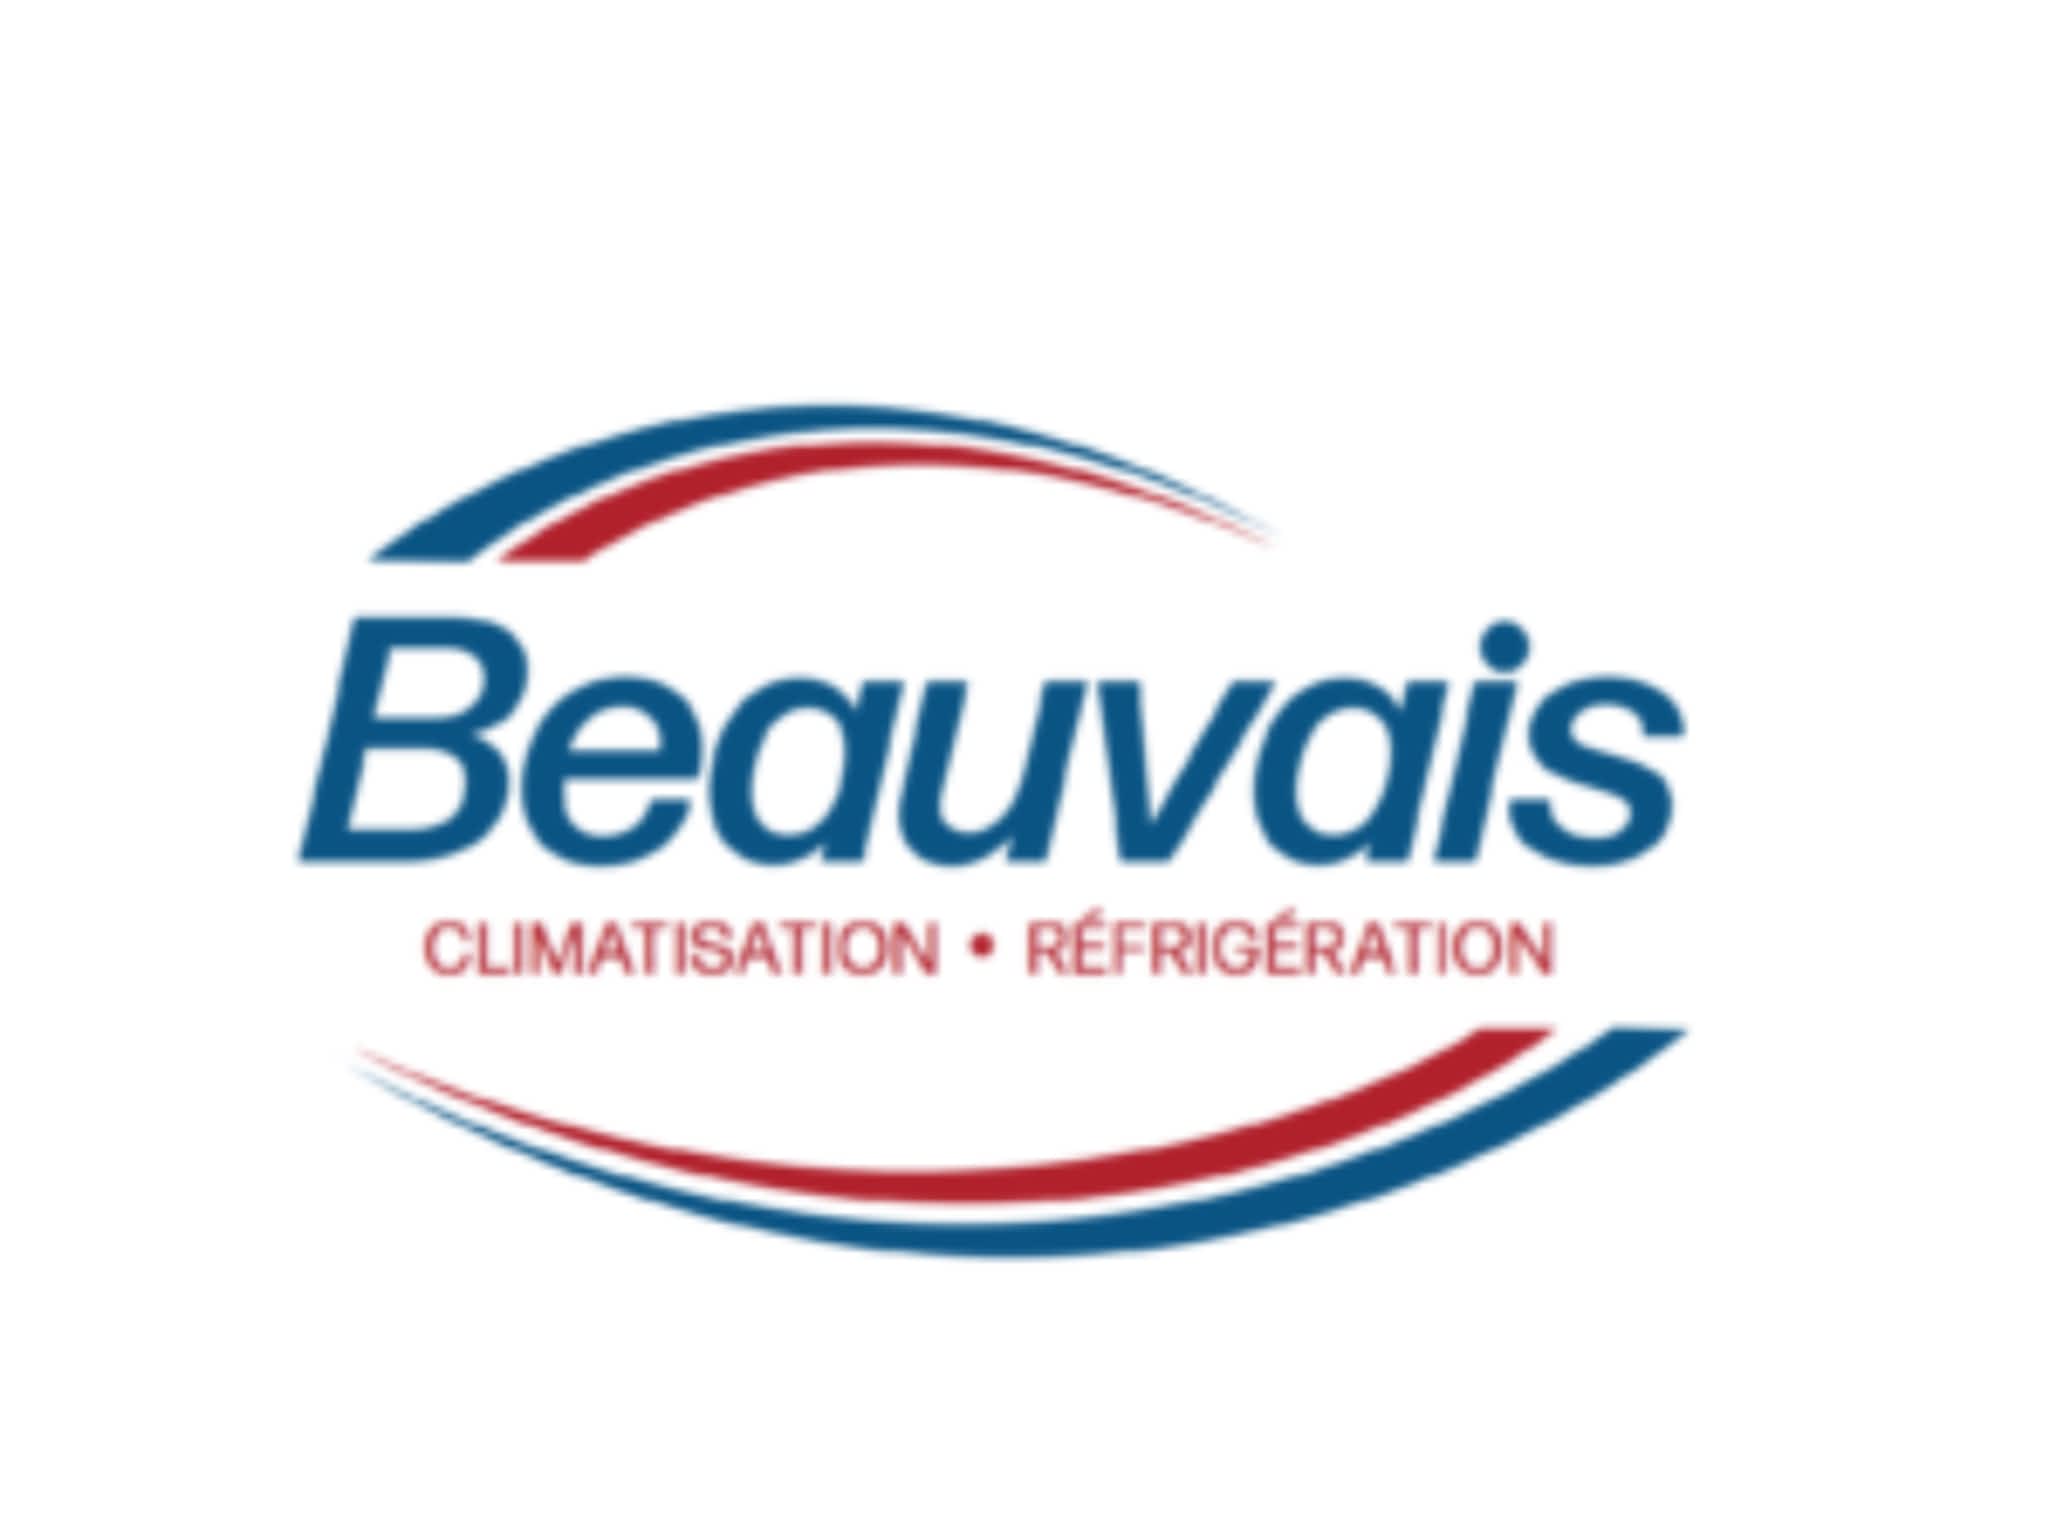 photo Beauvais Refrigeration